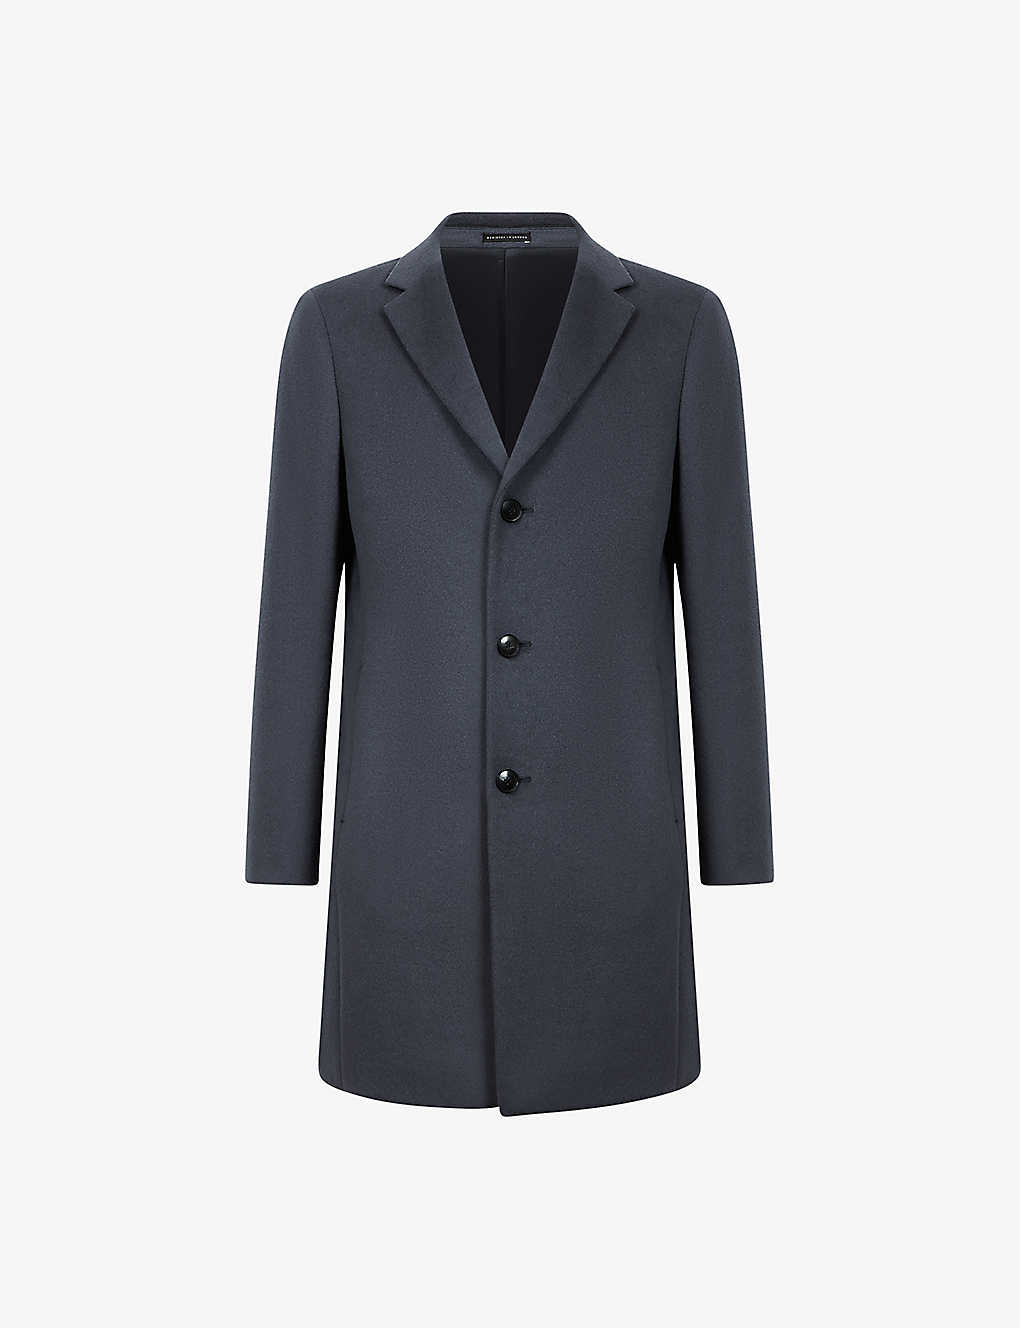 Reiss Gable - Airforce Blue Wool Blend Single Breasted Epsom Overcoat, Xs